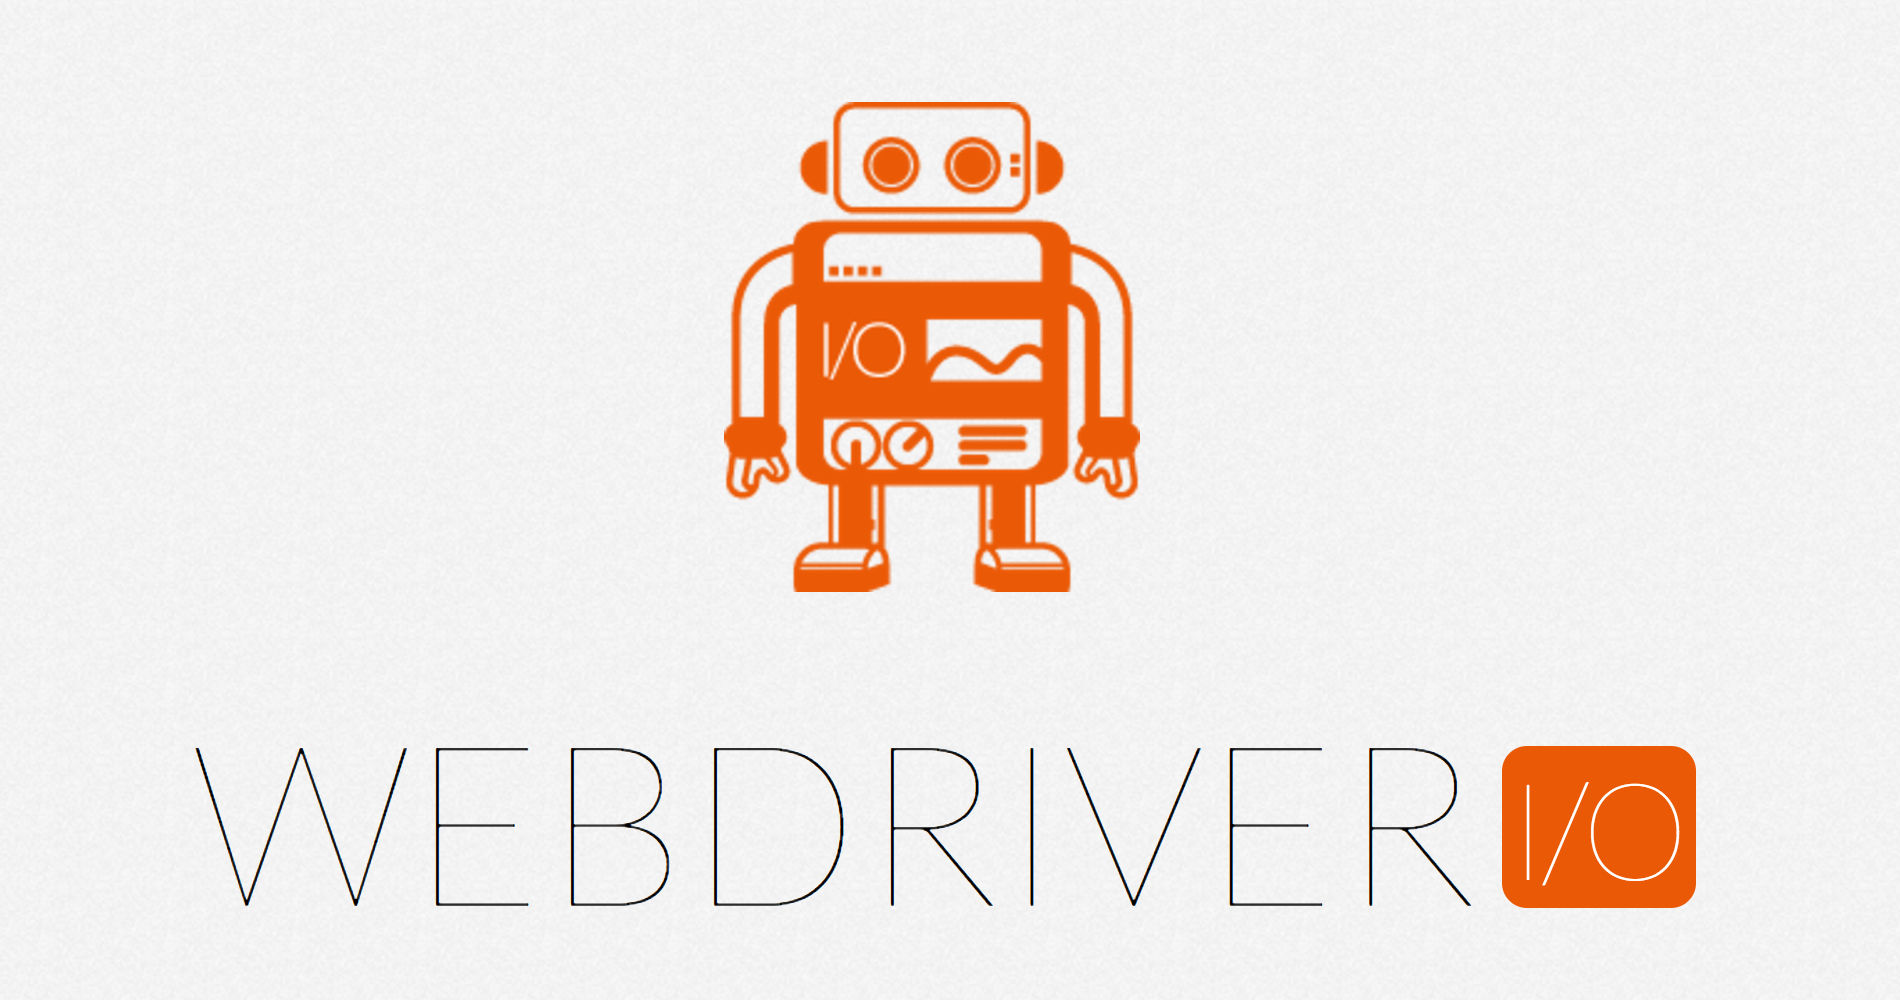 WebDriver.io logo